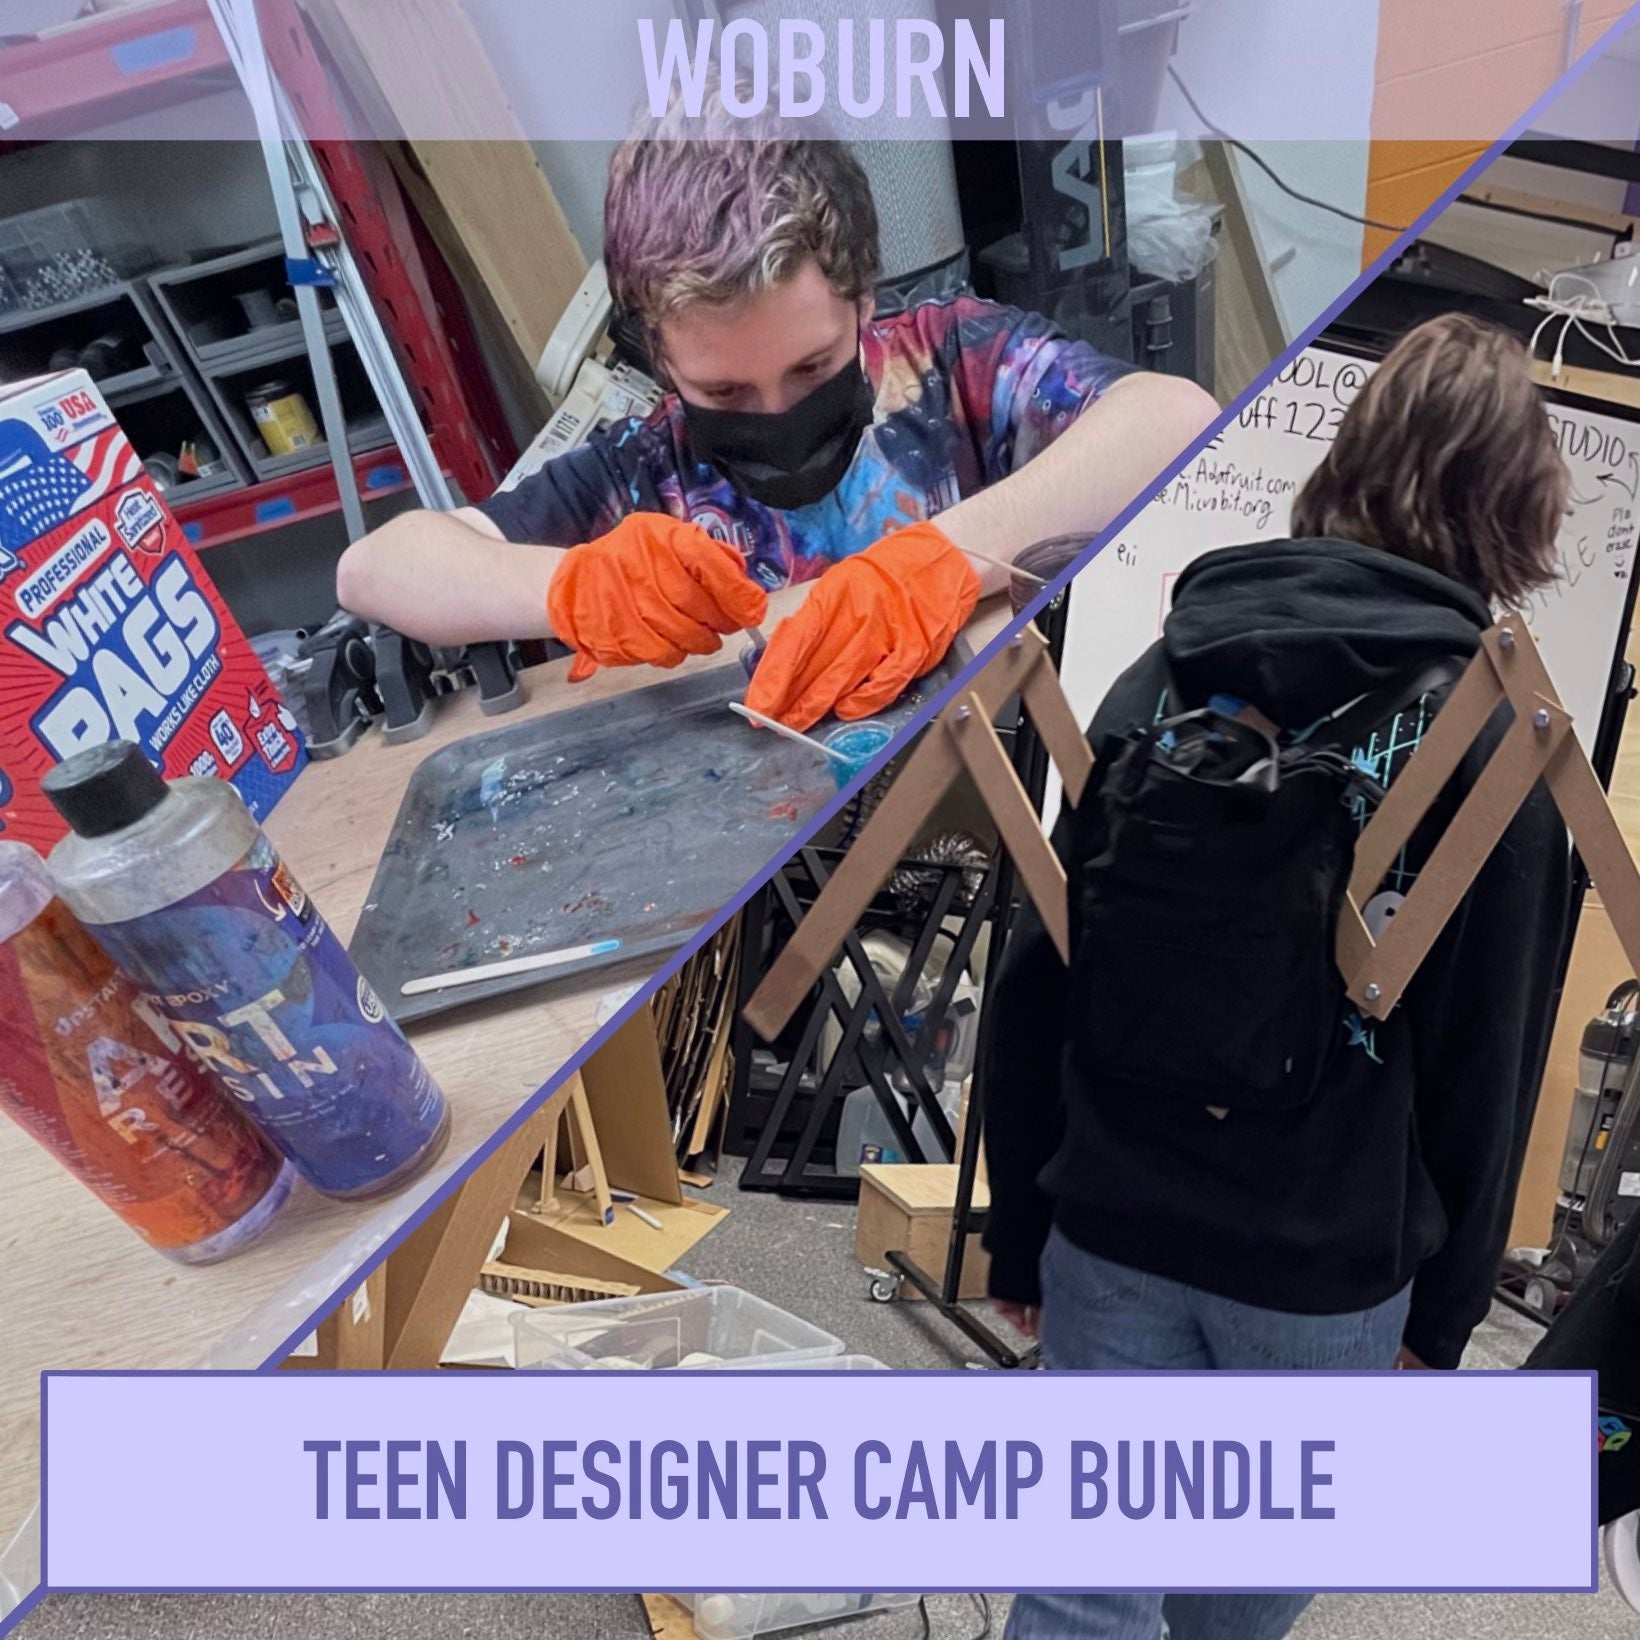 Teen Designer Camp Bundle (Woburn)